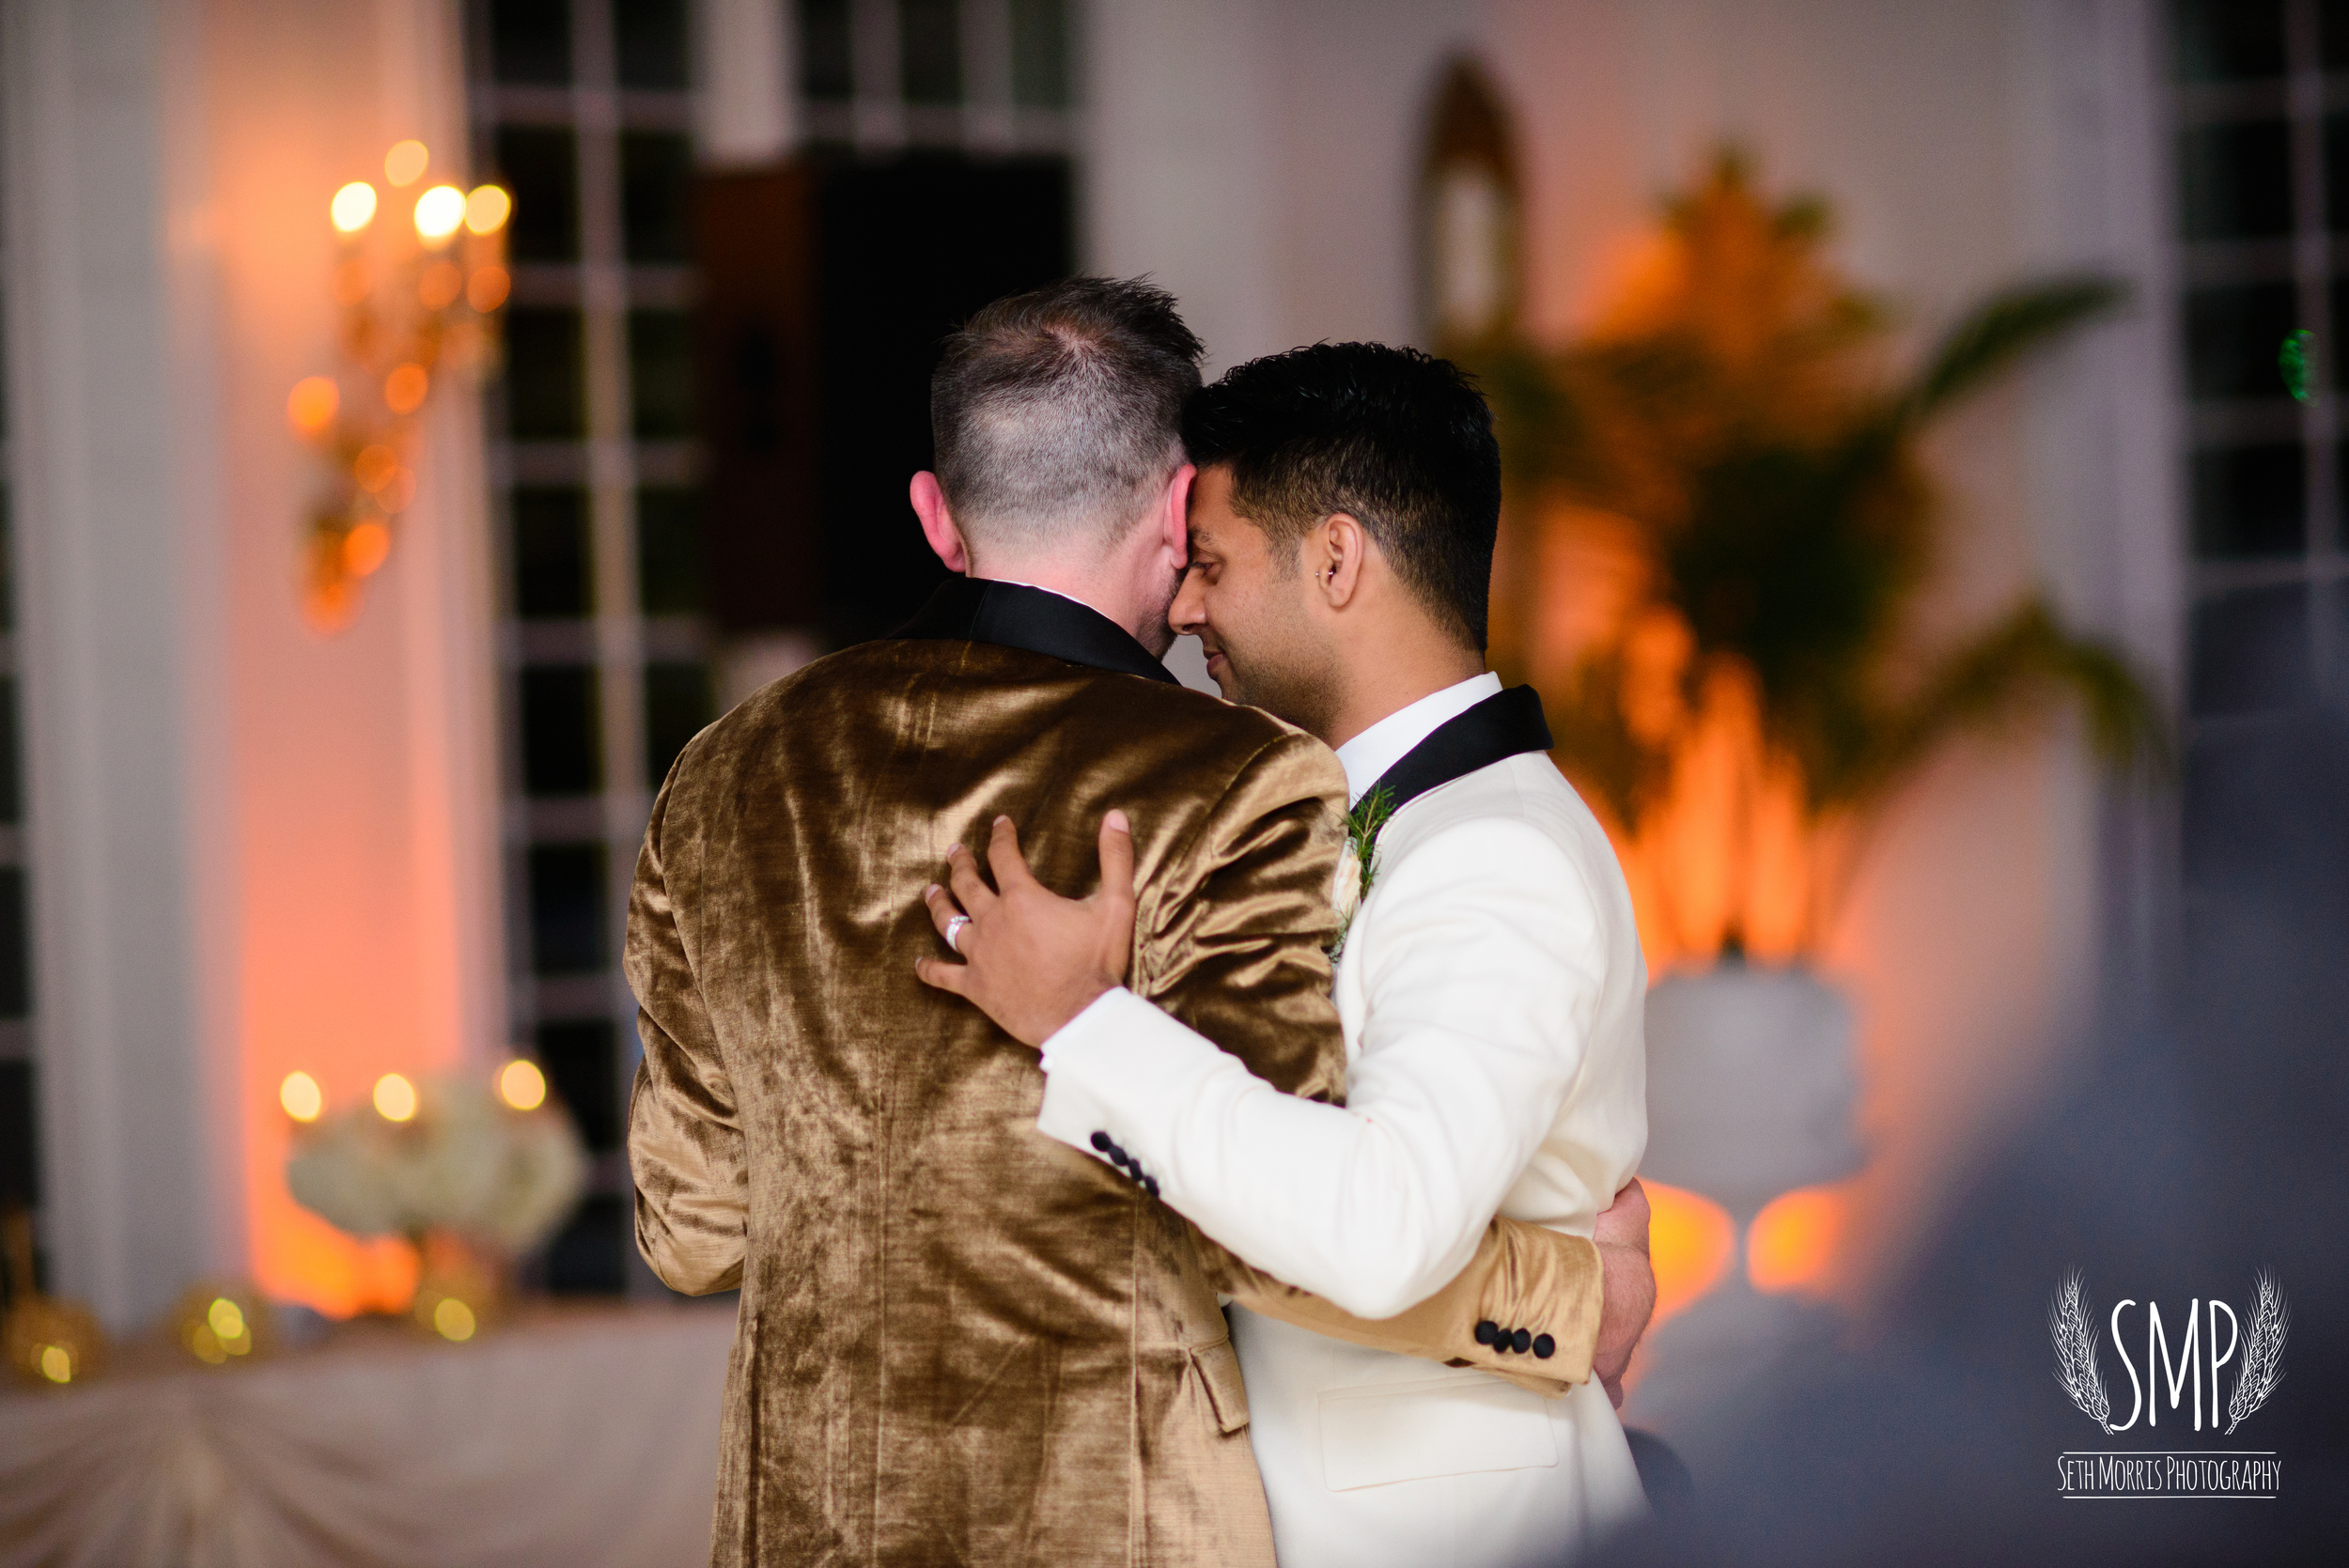 same-sex-wedding-photographer-chicago-illinois-111.jpg